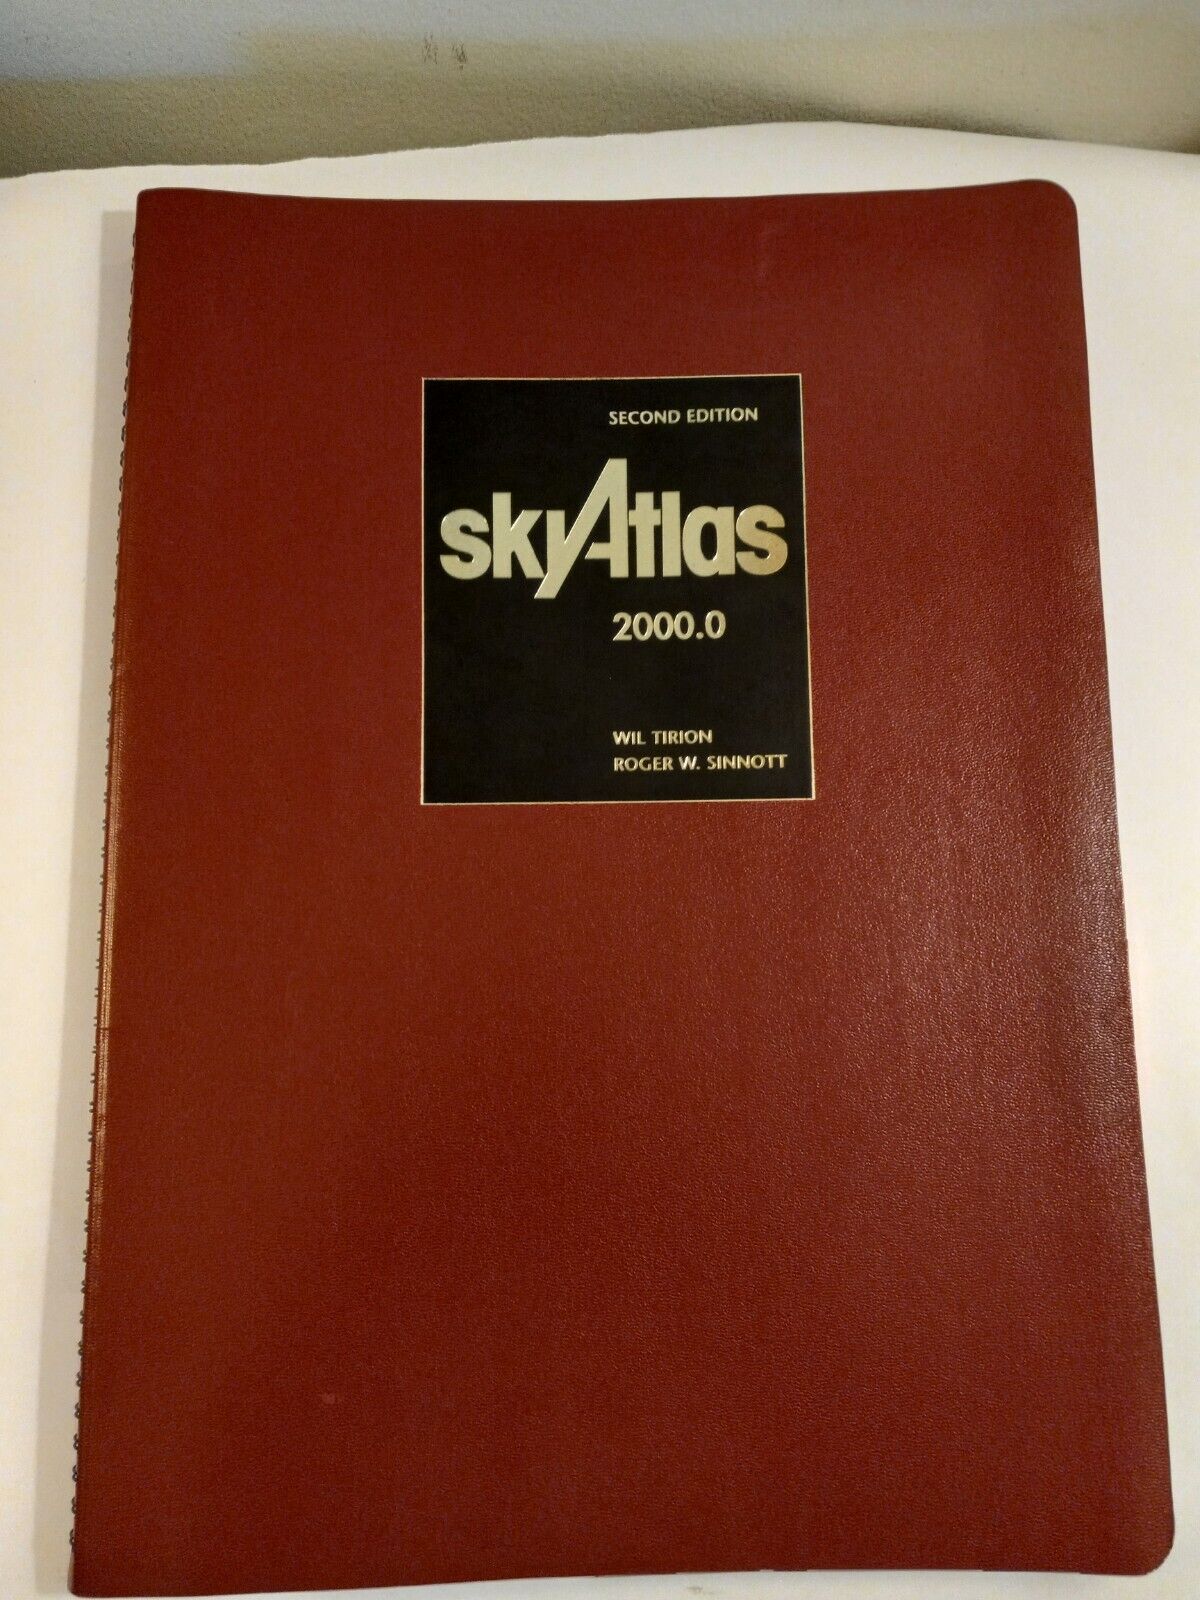 Sky Atlas 2000.0 2nd Edition Spiral Bound 1998